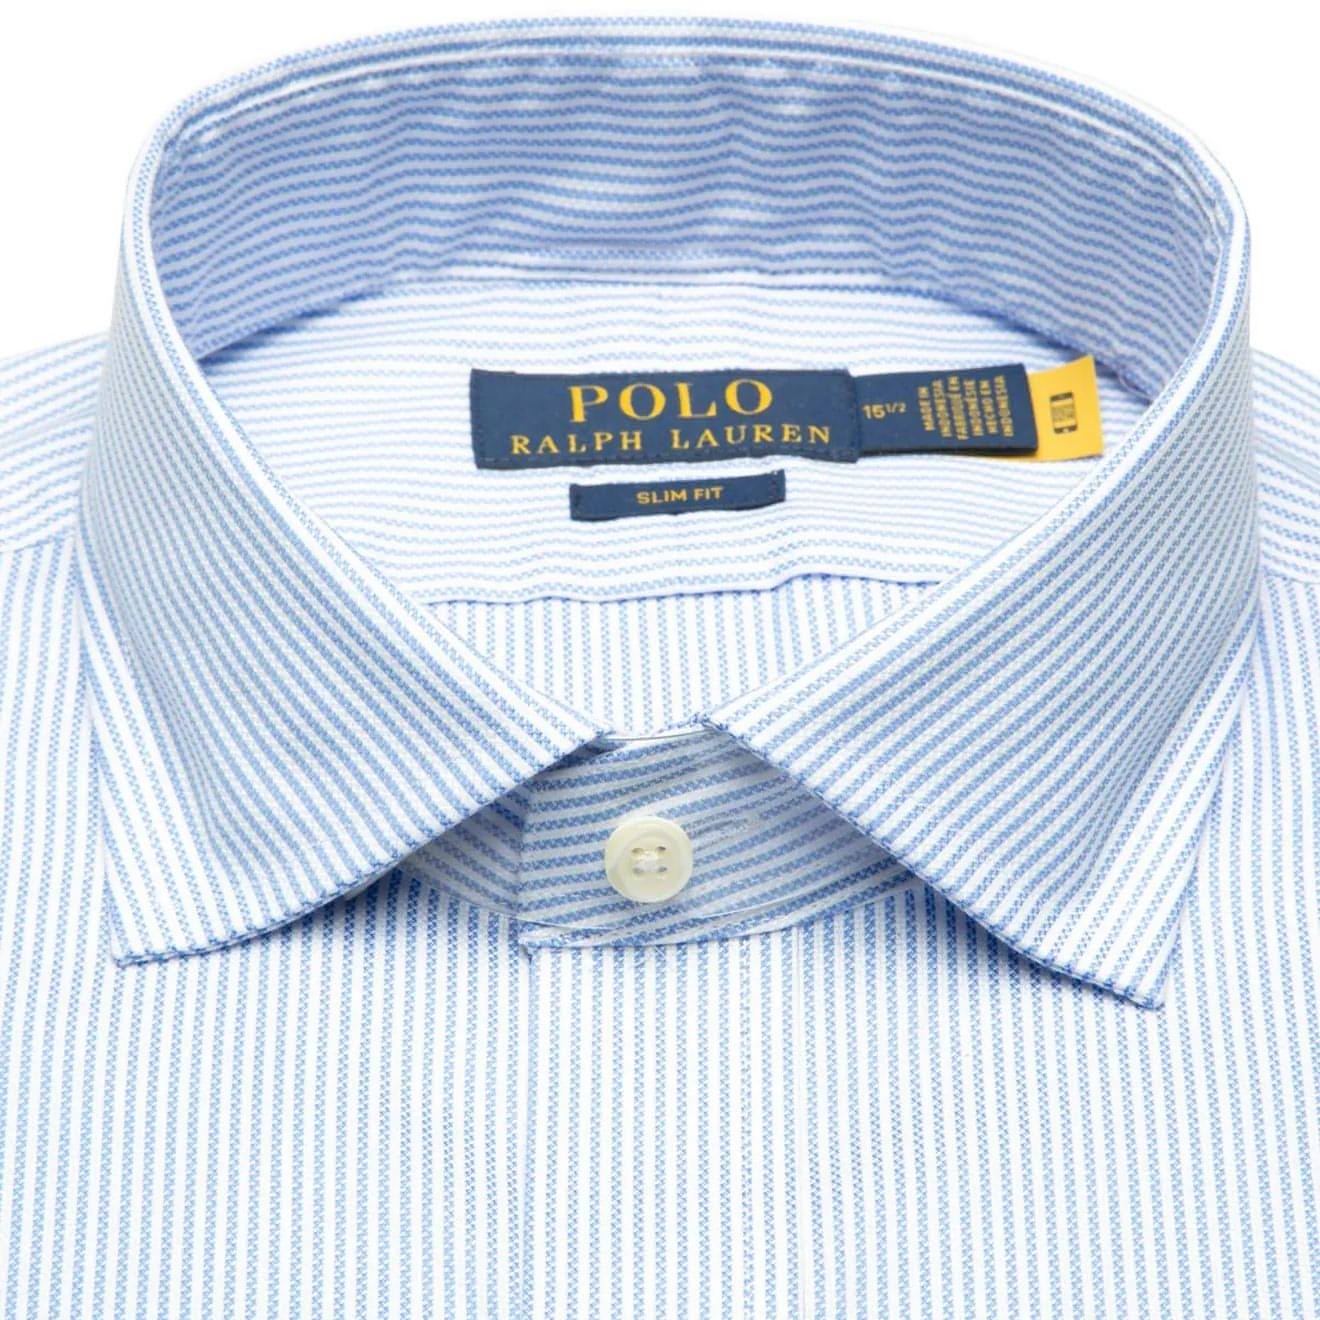 POLO RALPH LAUREN vyriški mėlyni marškiniai ilgomis rankovėmis Long sleeve dress shirt